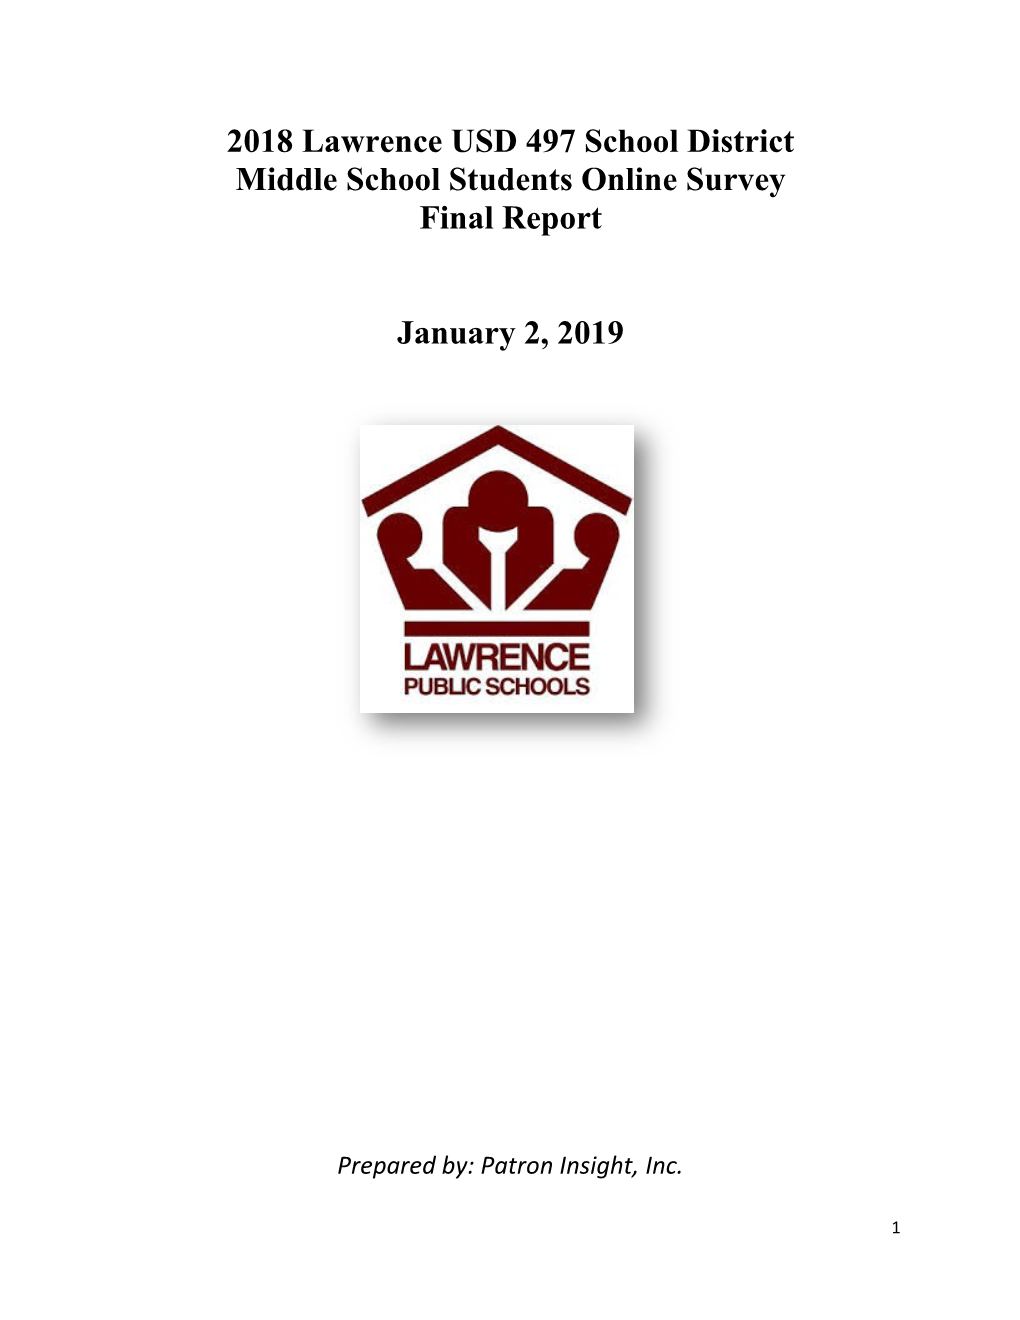 Lawrence Online Middle School Students Survey 1 2 19 FINAL.Pdf